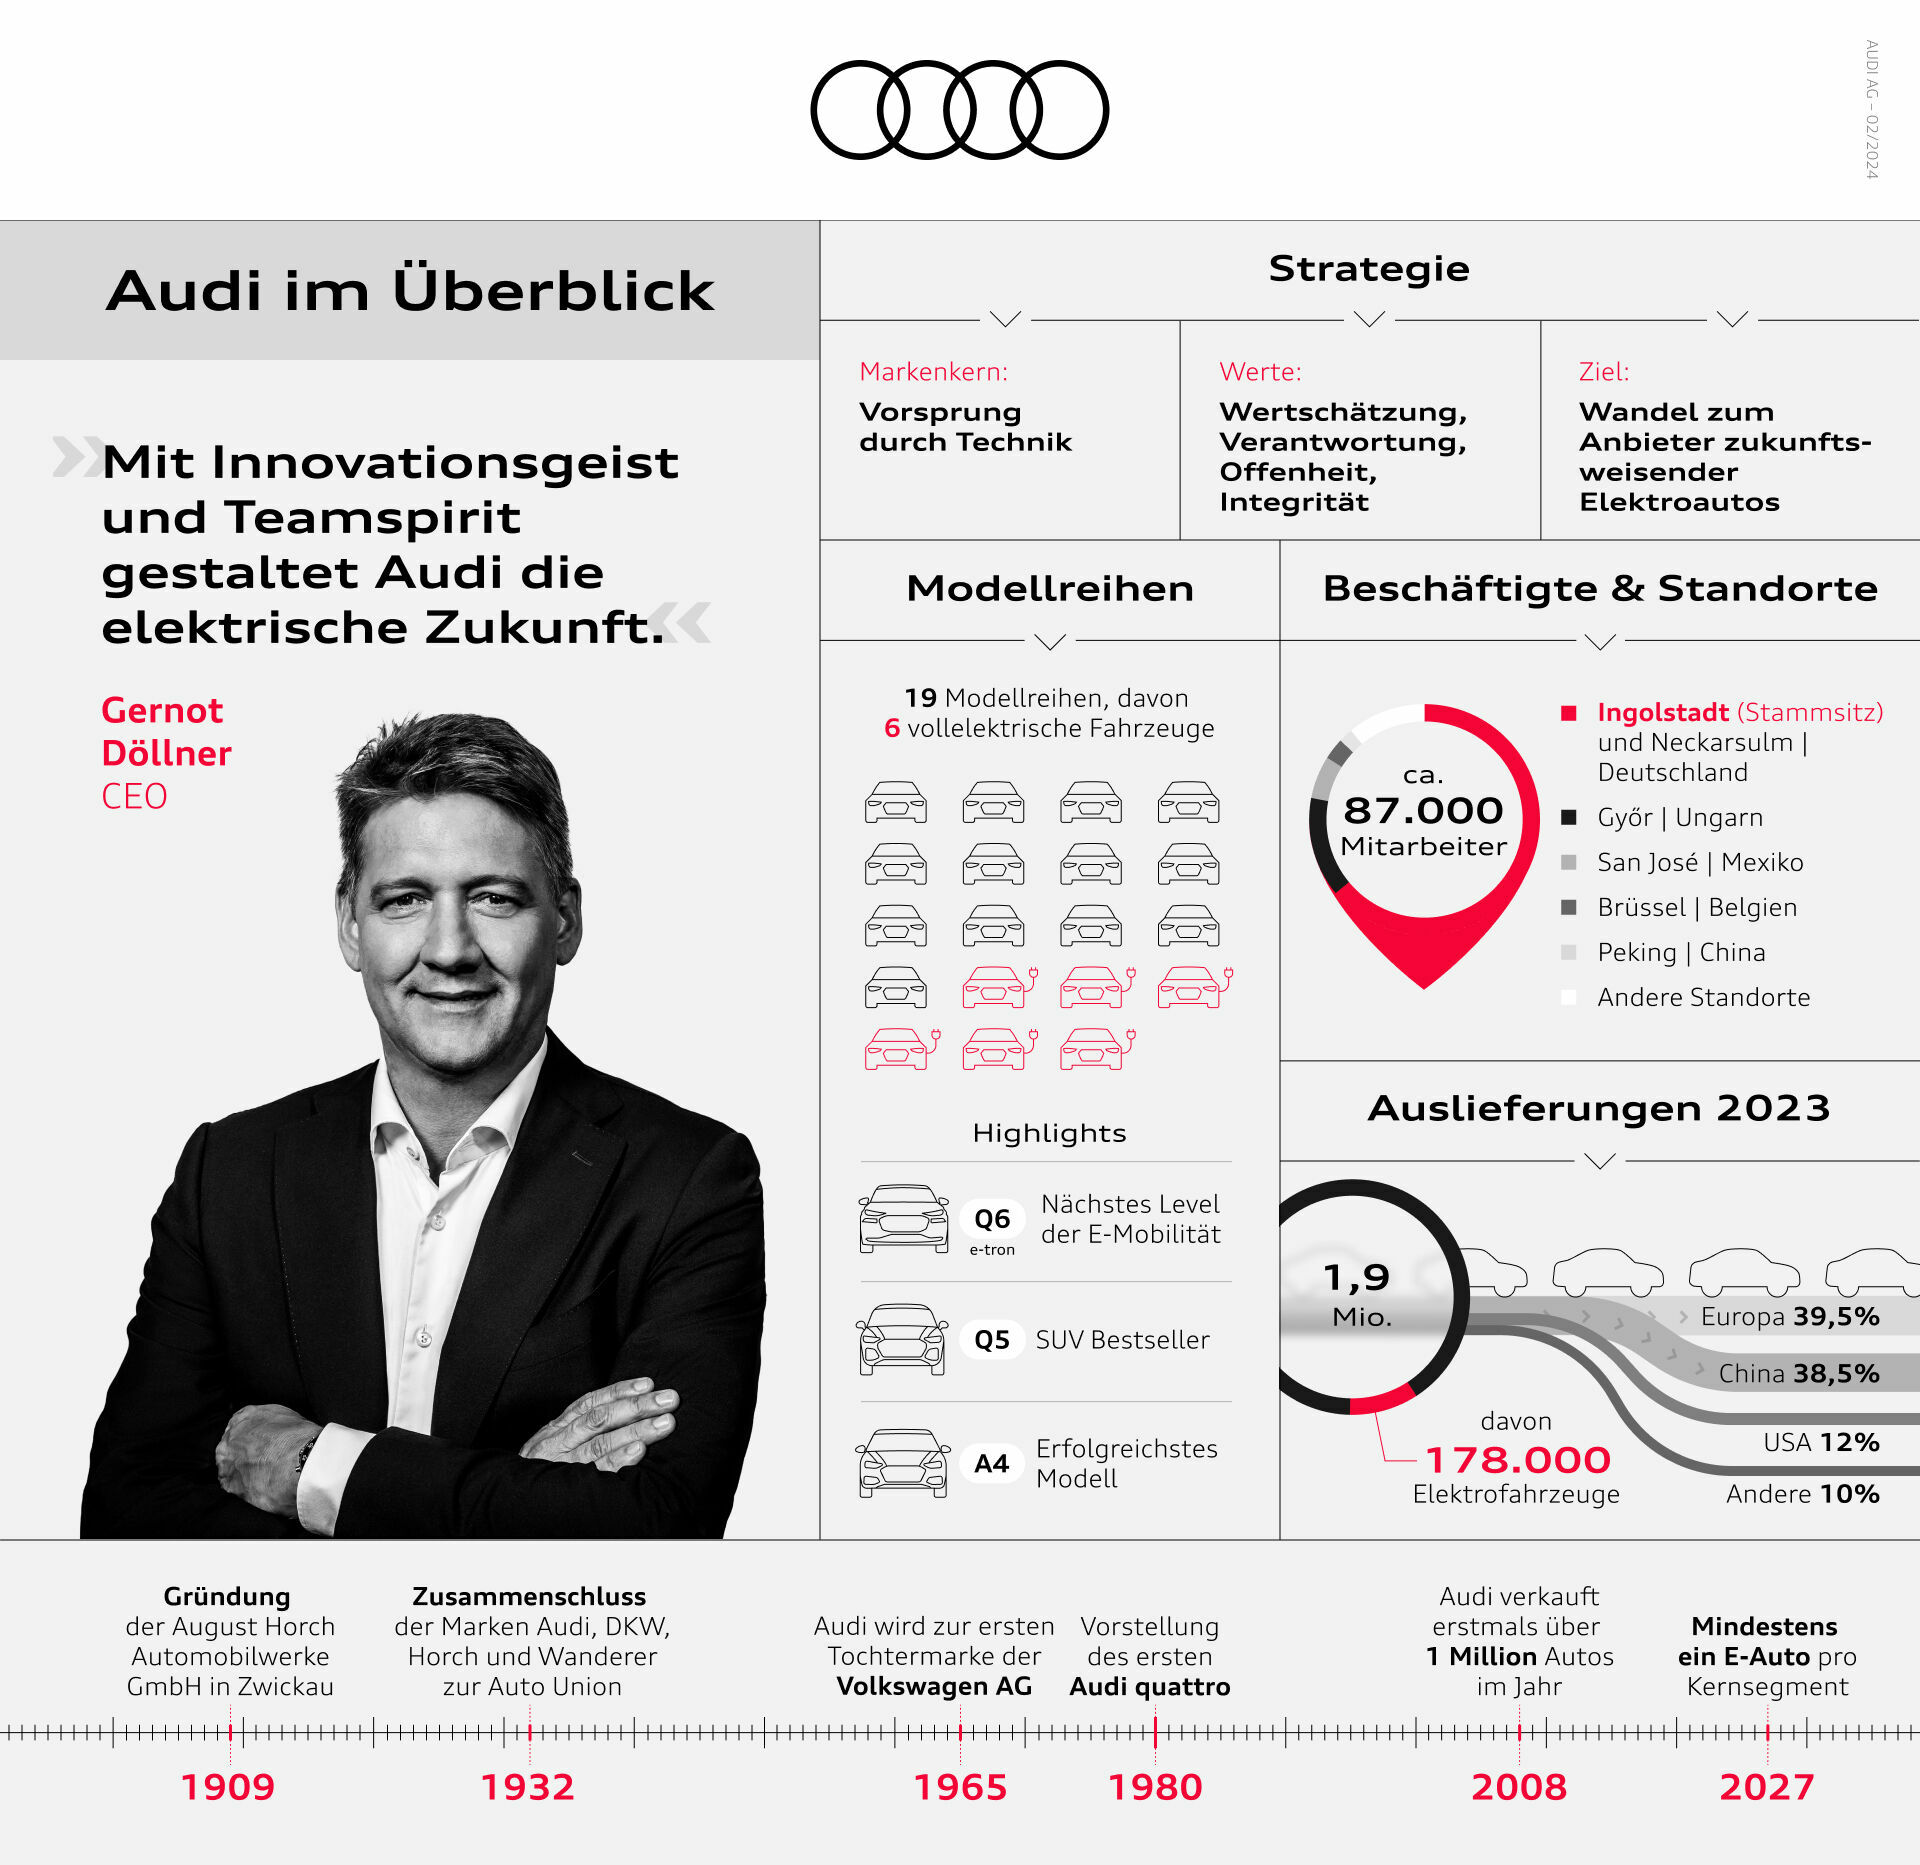 Audi im Überblick